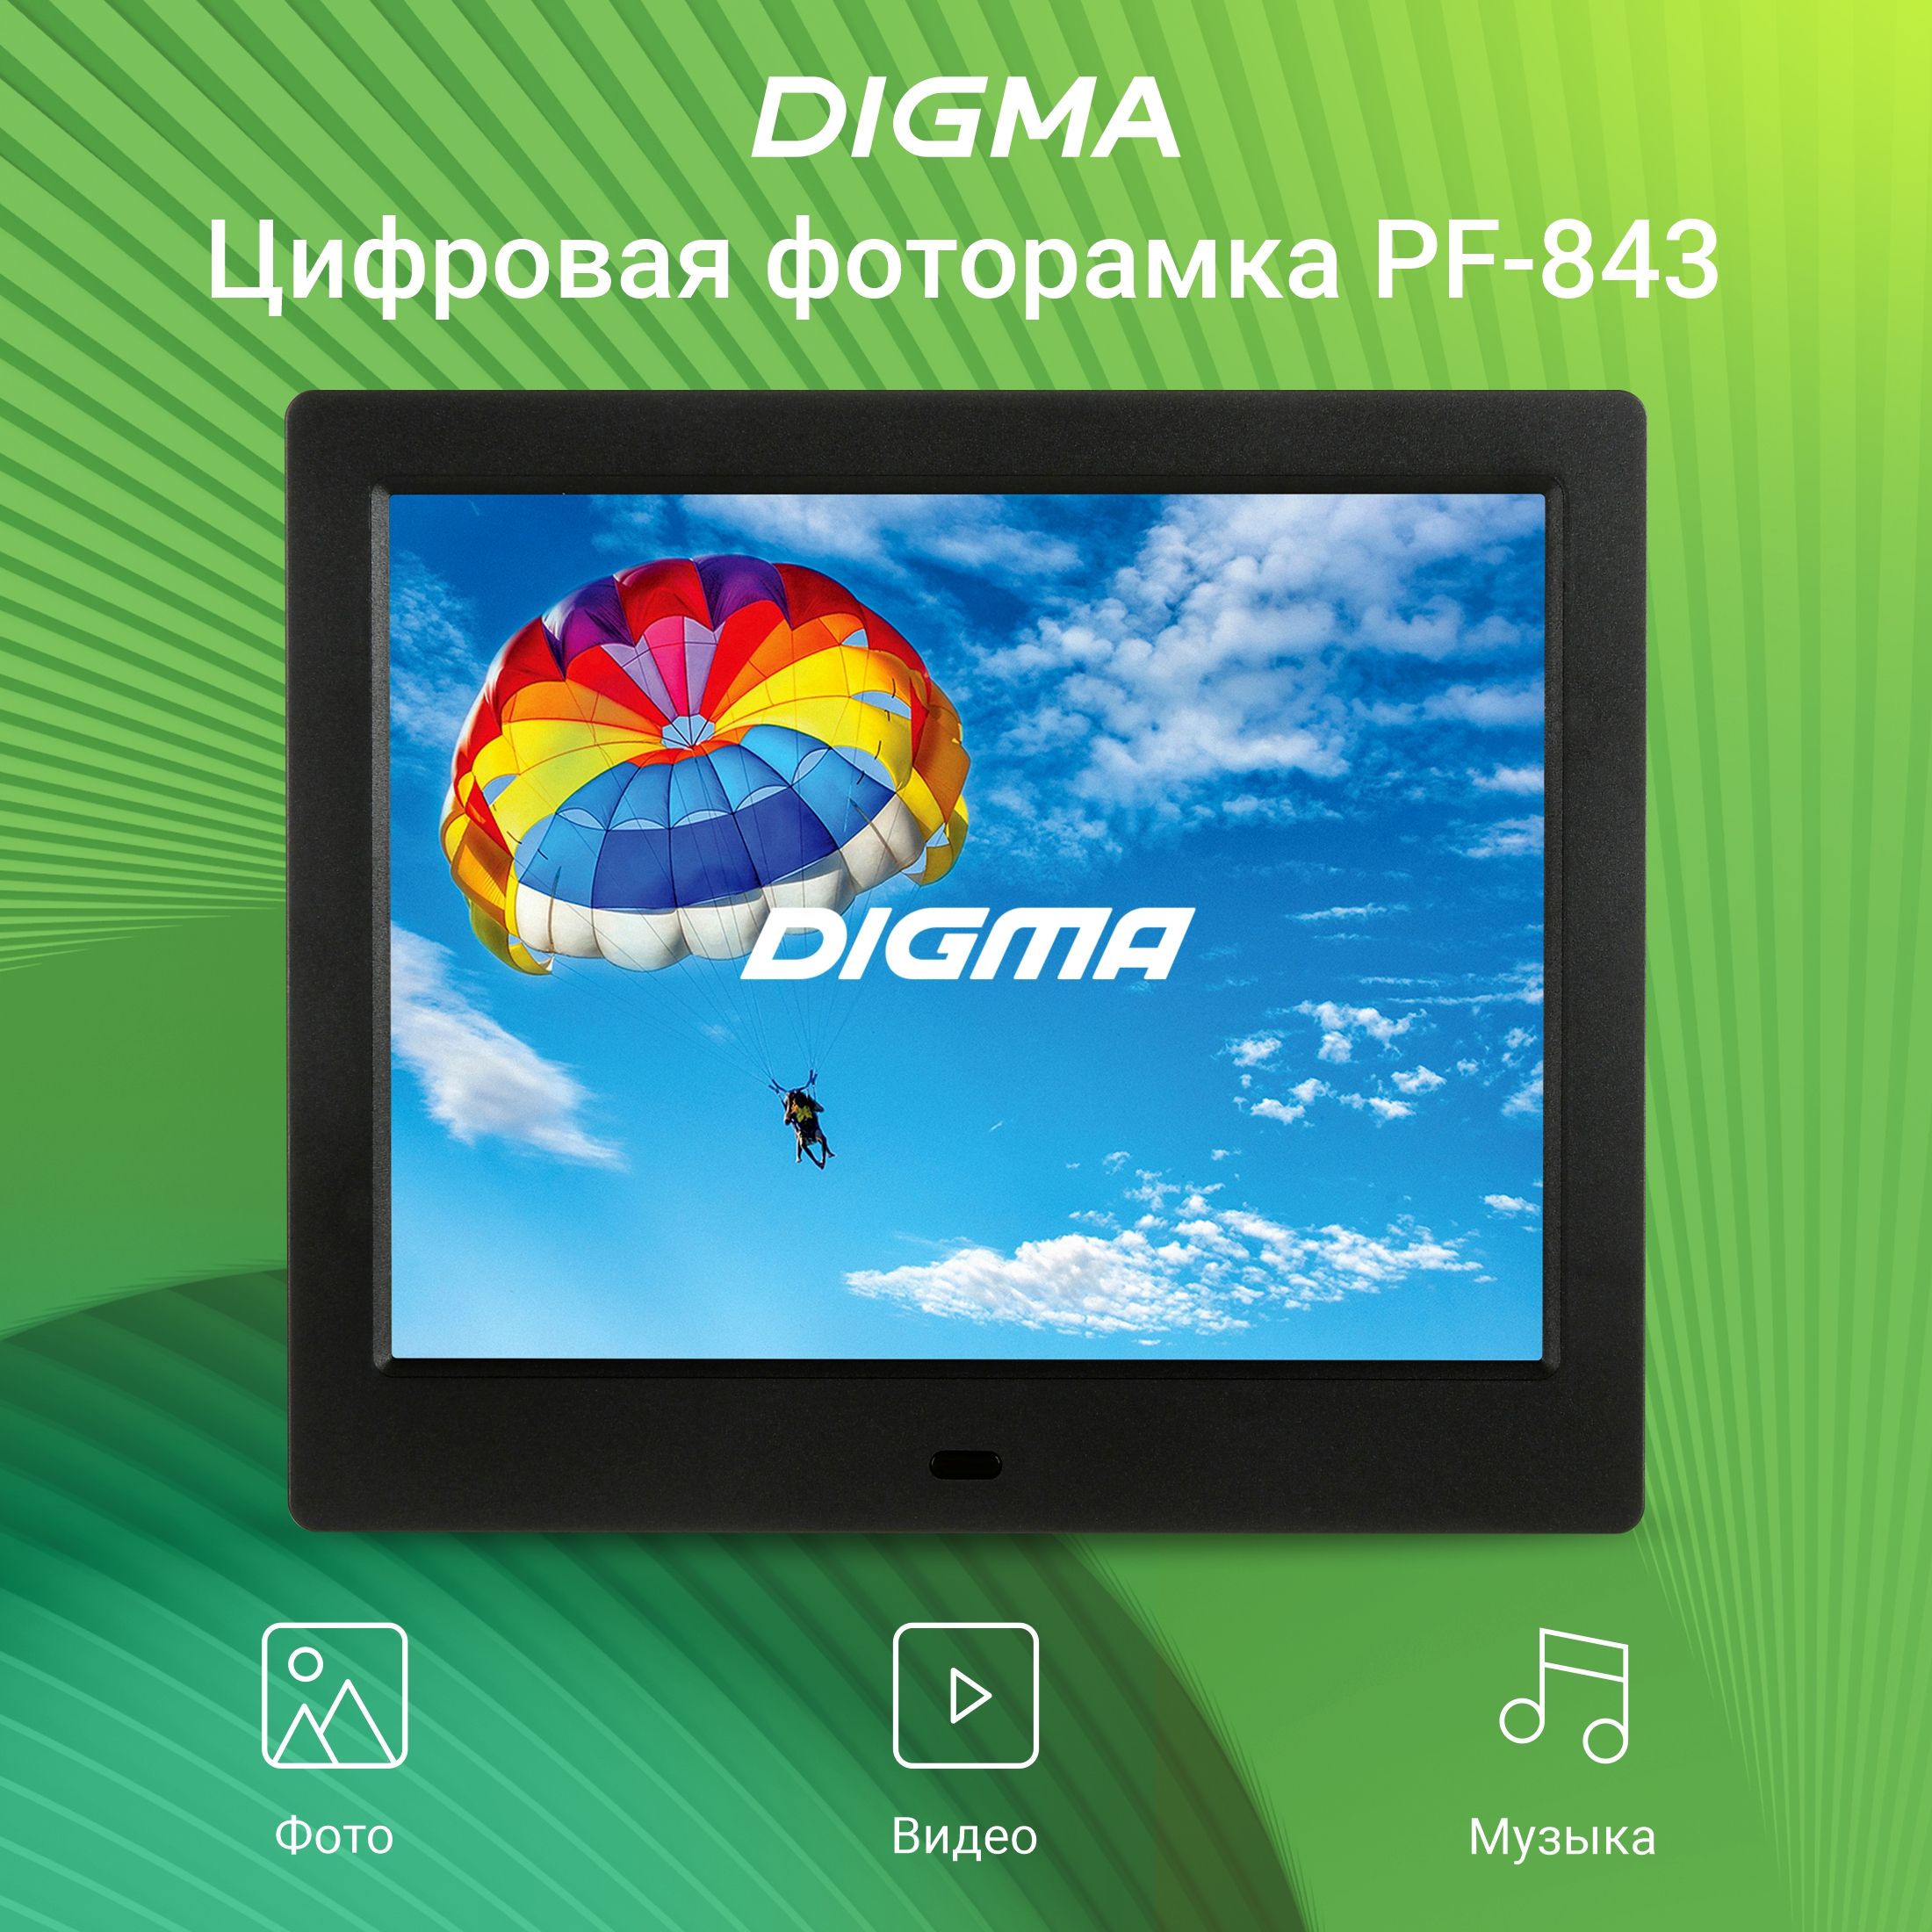 Digma Pf-843